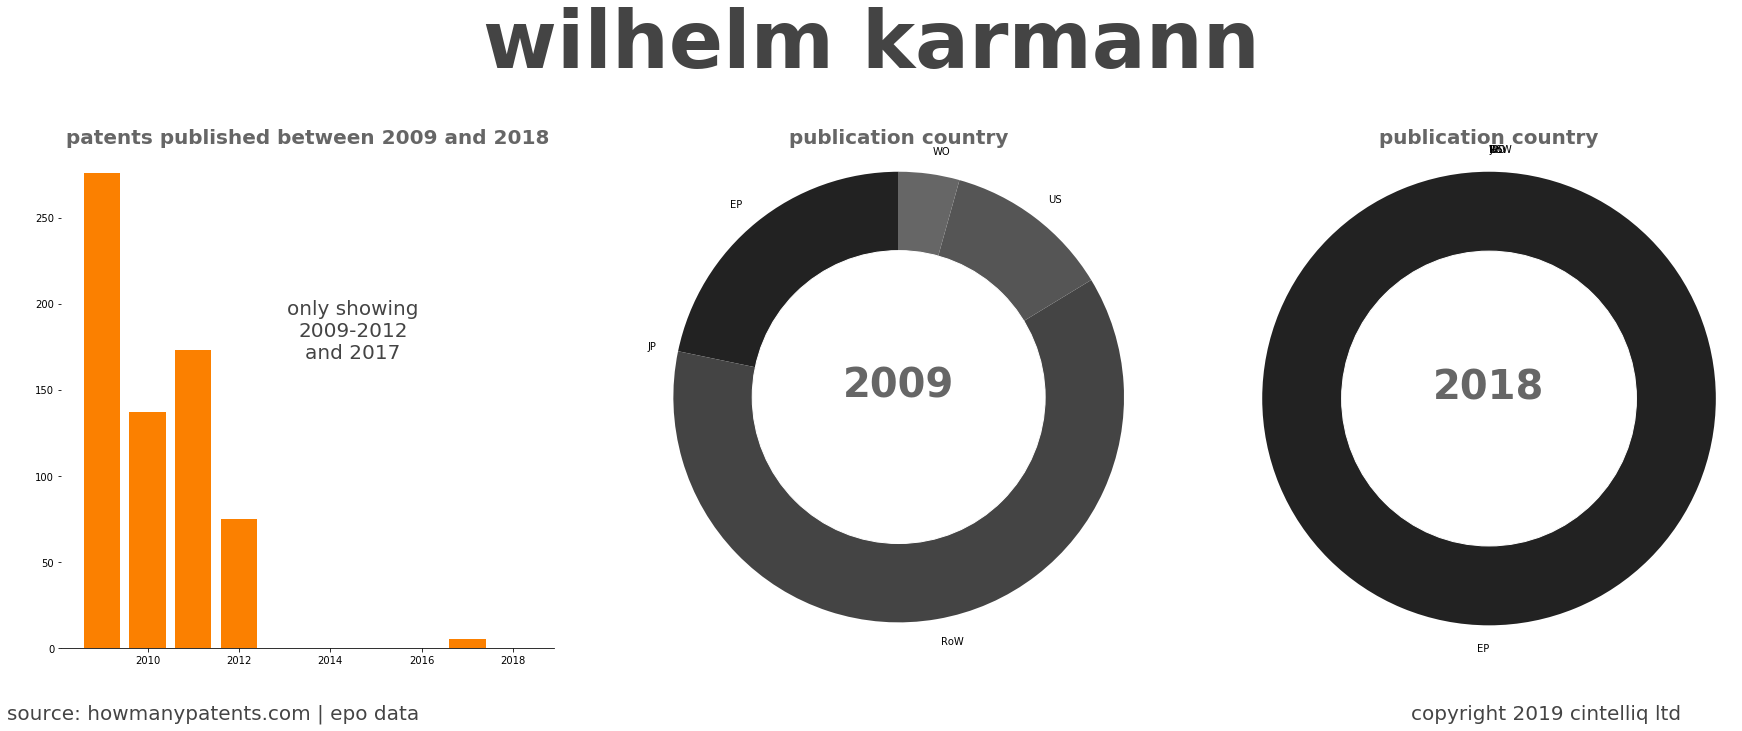 summary of patents for Wilhelm Karmann